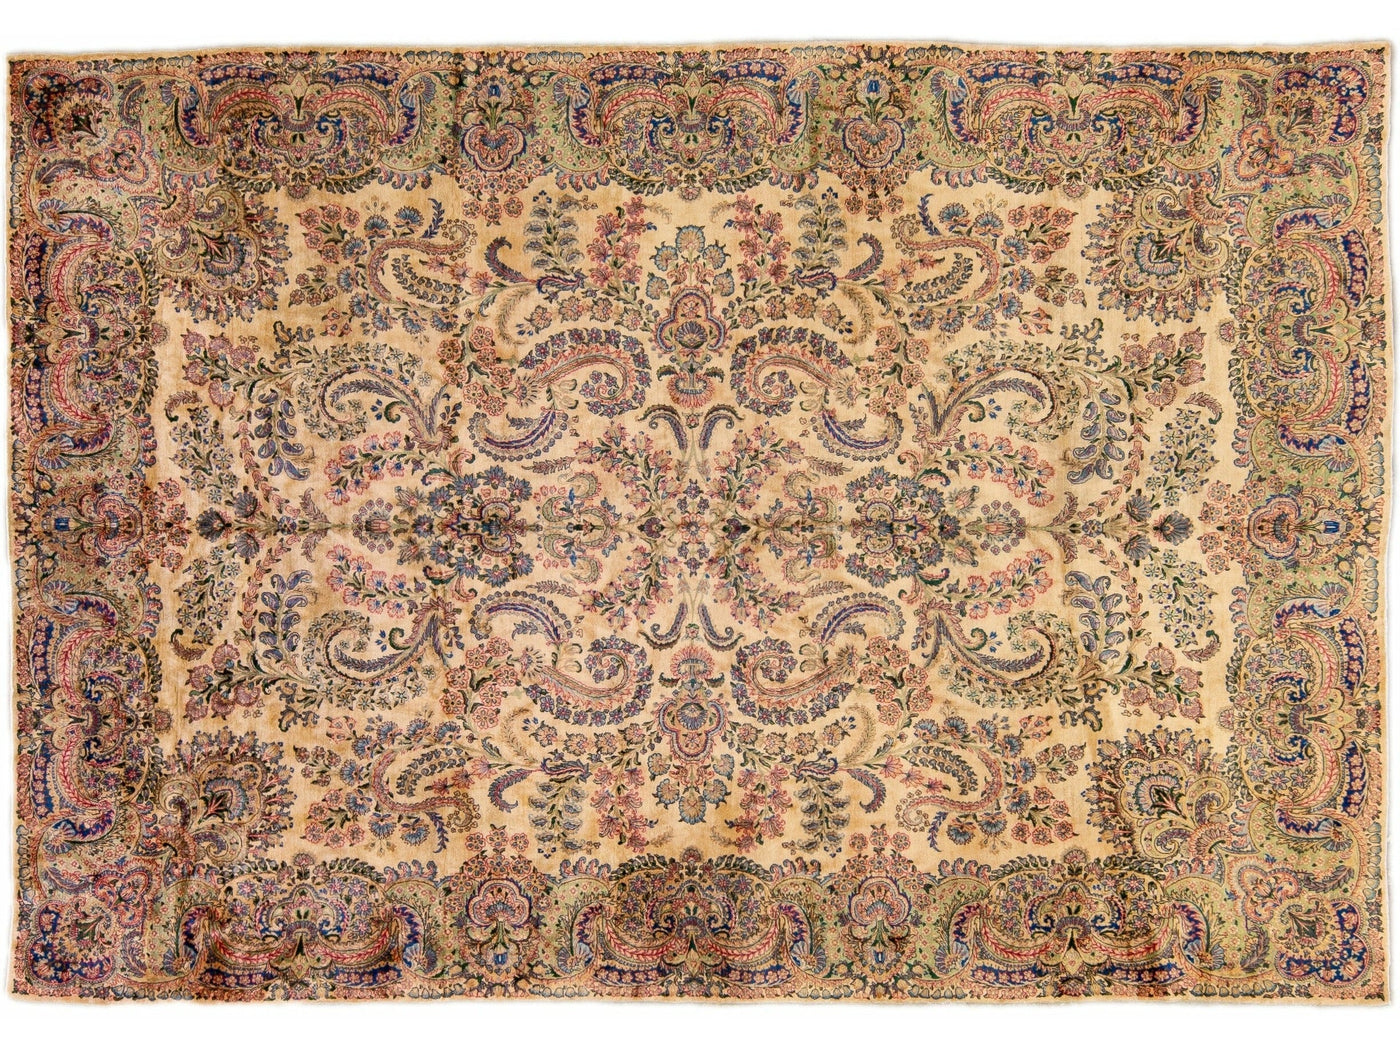 Tan Antique Kerman Handmade Allover Floral Designed Wool Rug